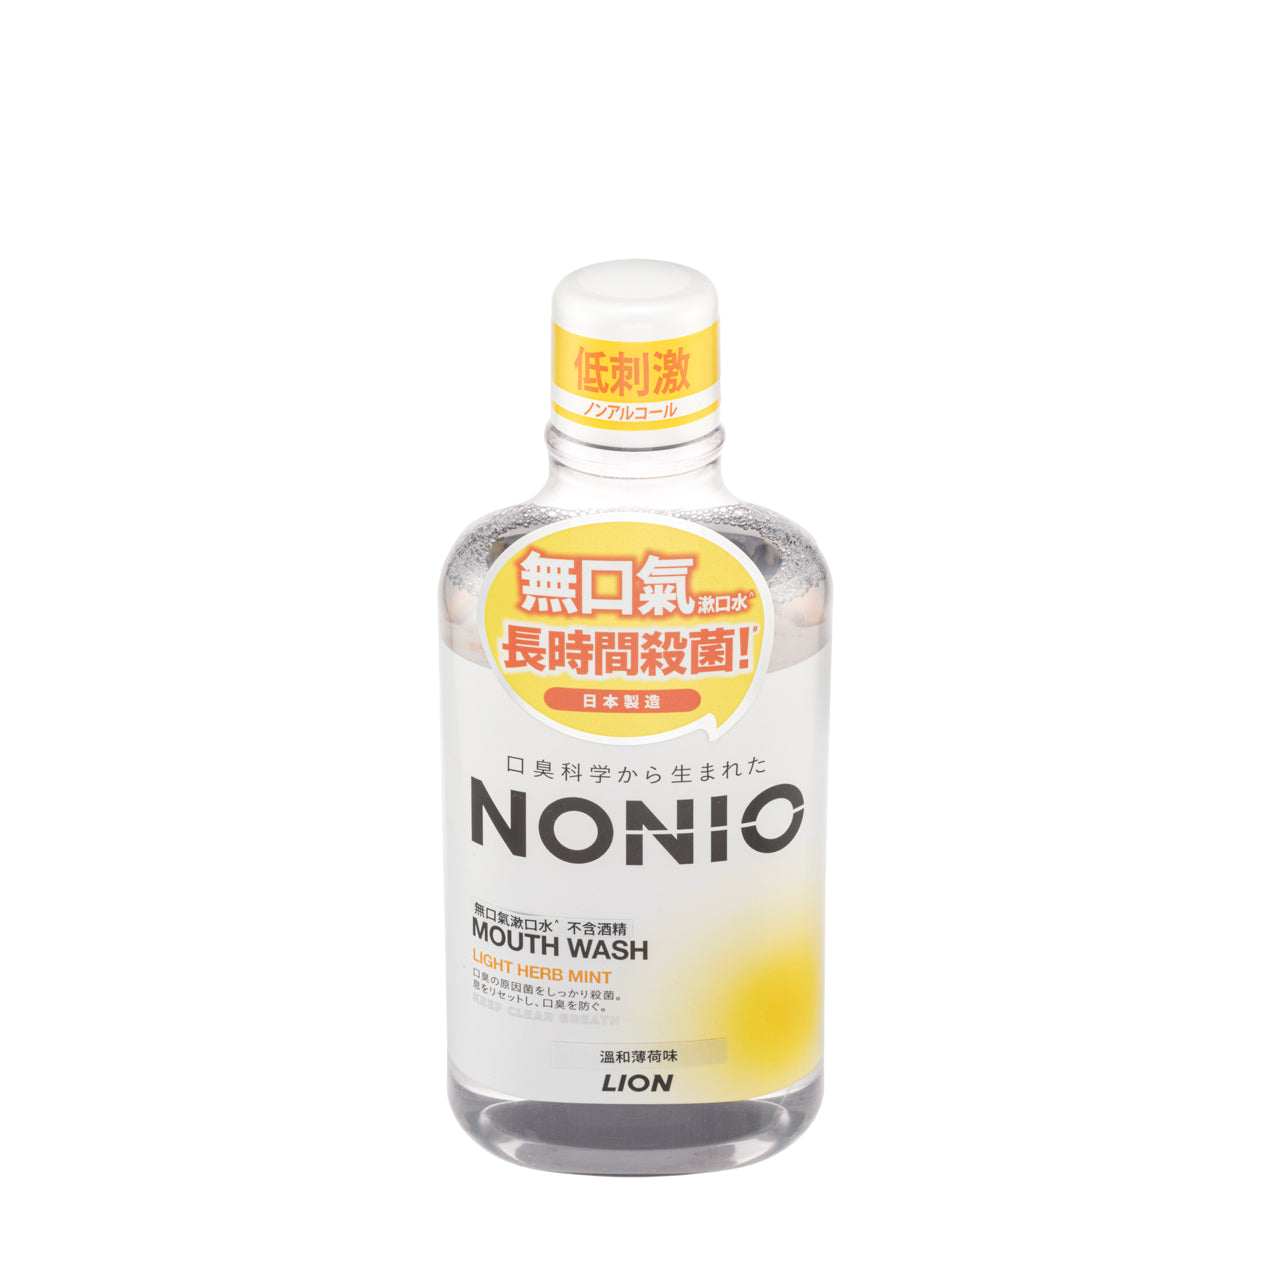 Lion Nonio Mouth Wash Non-Alcohol Light Herb Mint 600ML